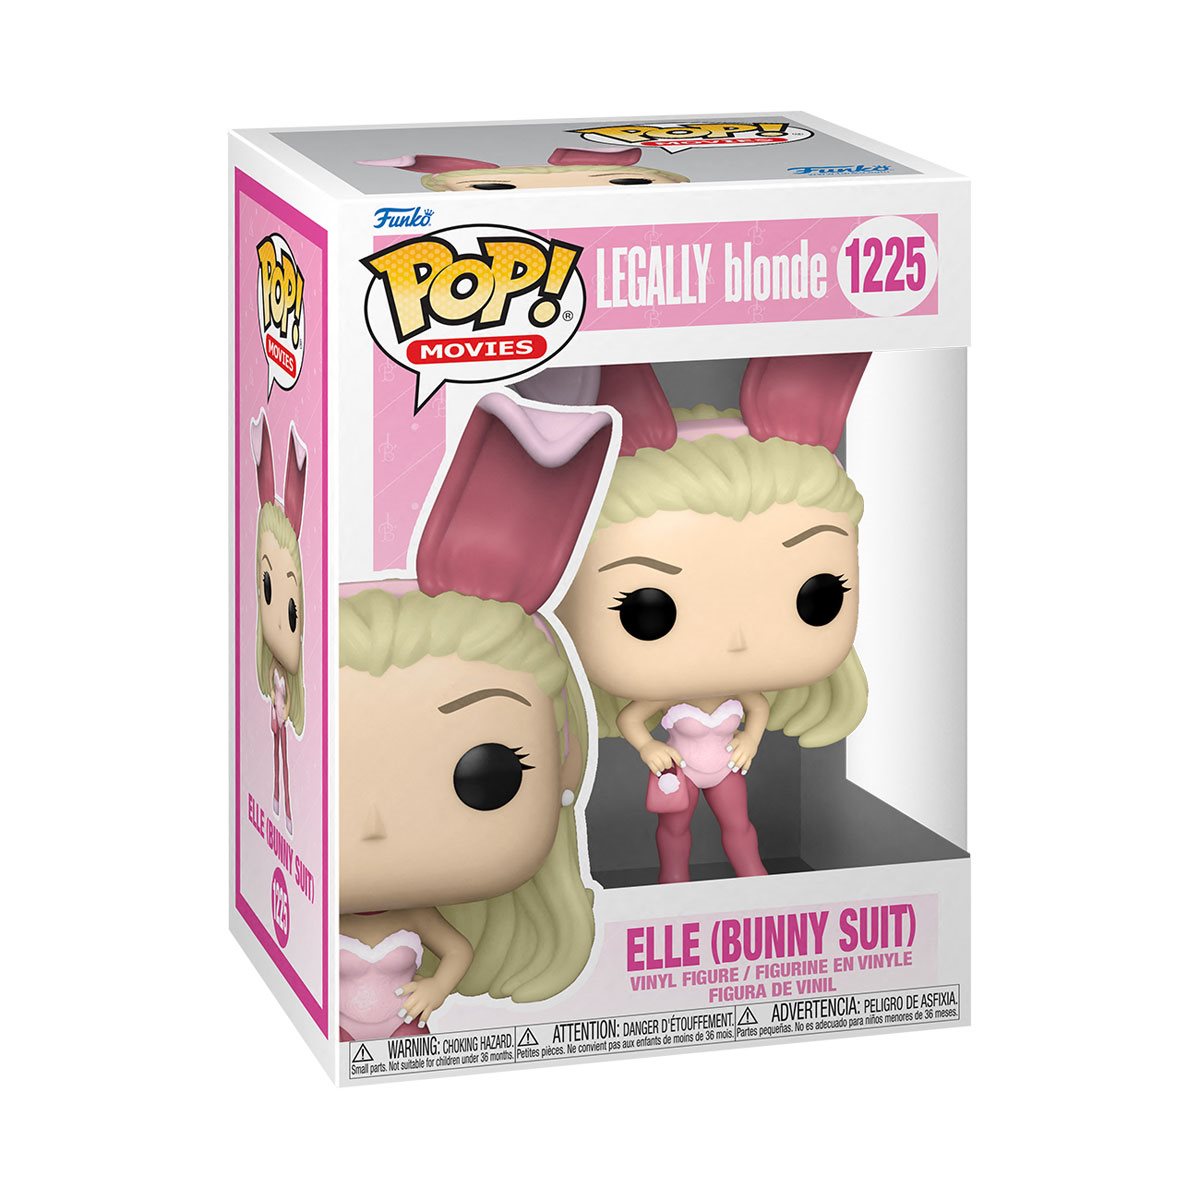 Legally Blonde: Elle in Bunny Suit Pop! Vinyl Figure (1225)